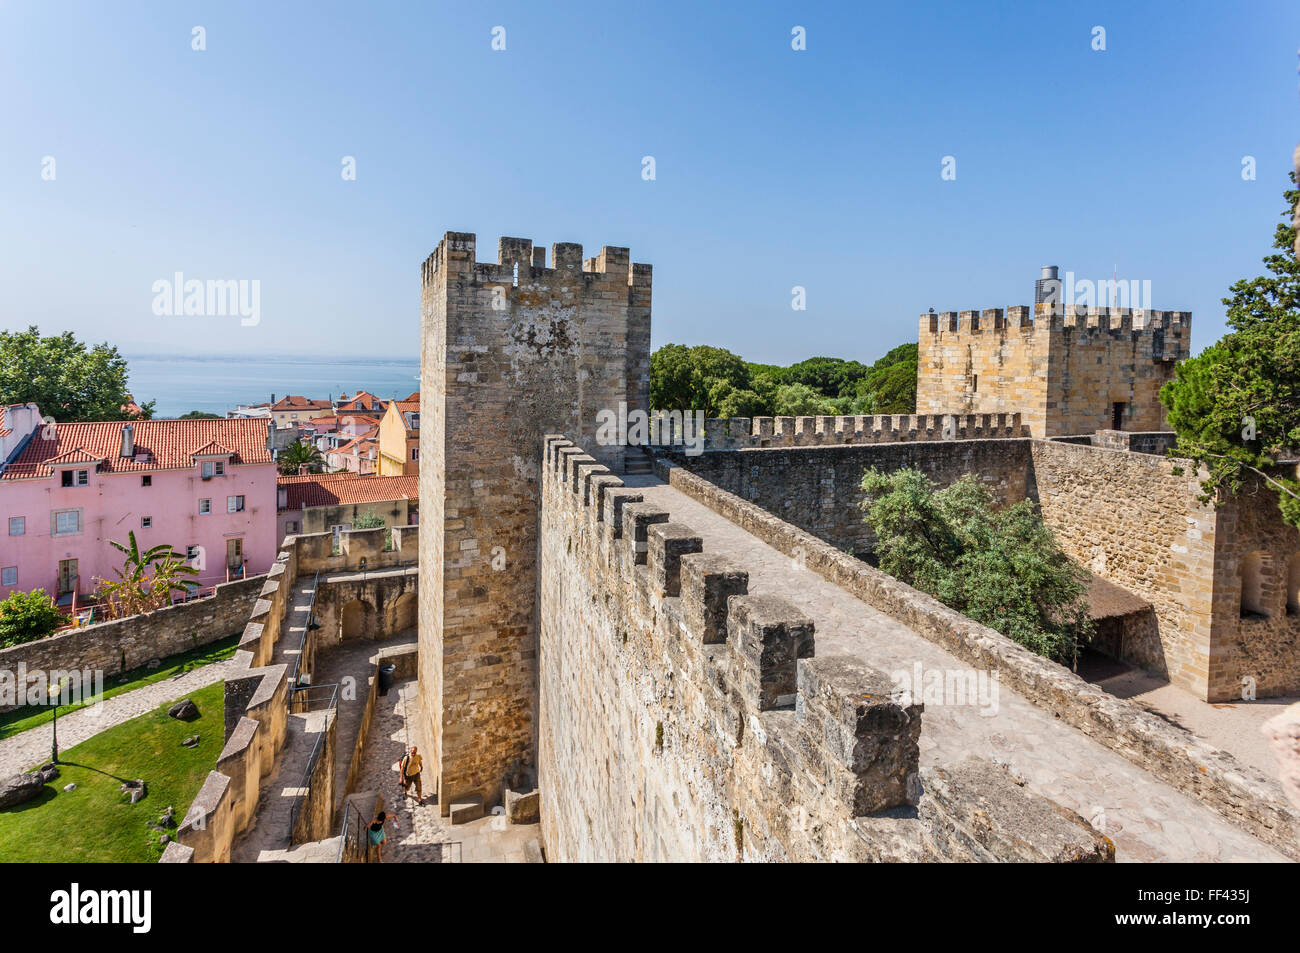 view from the battlements of Castelo de Sao Jorge, St. George's Castle, Lisbon, Portugal Stock Photo